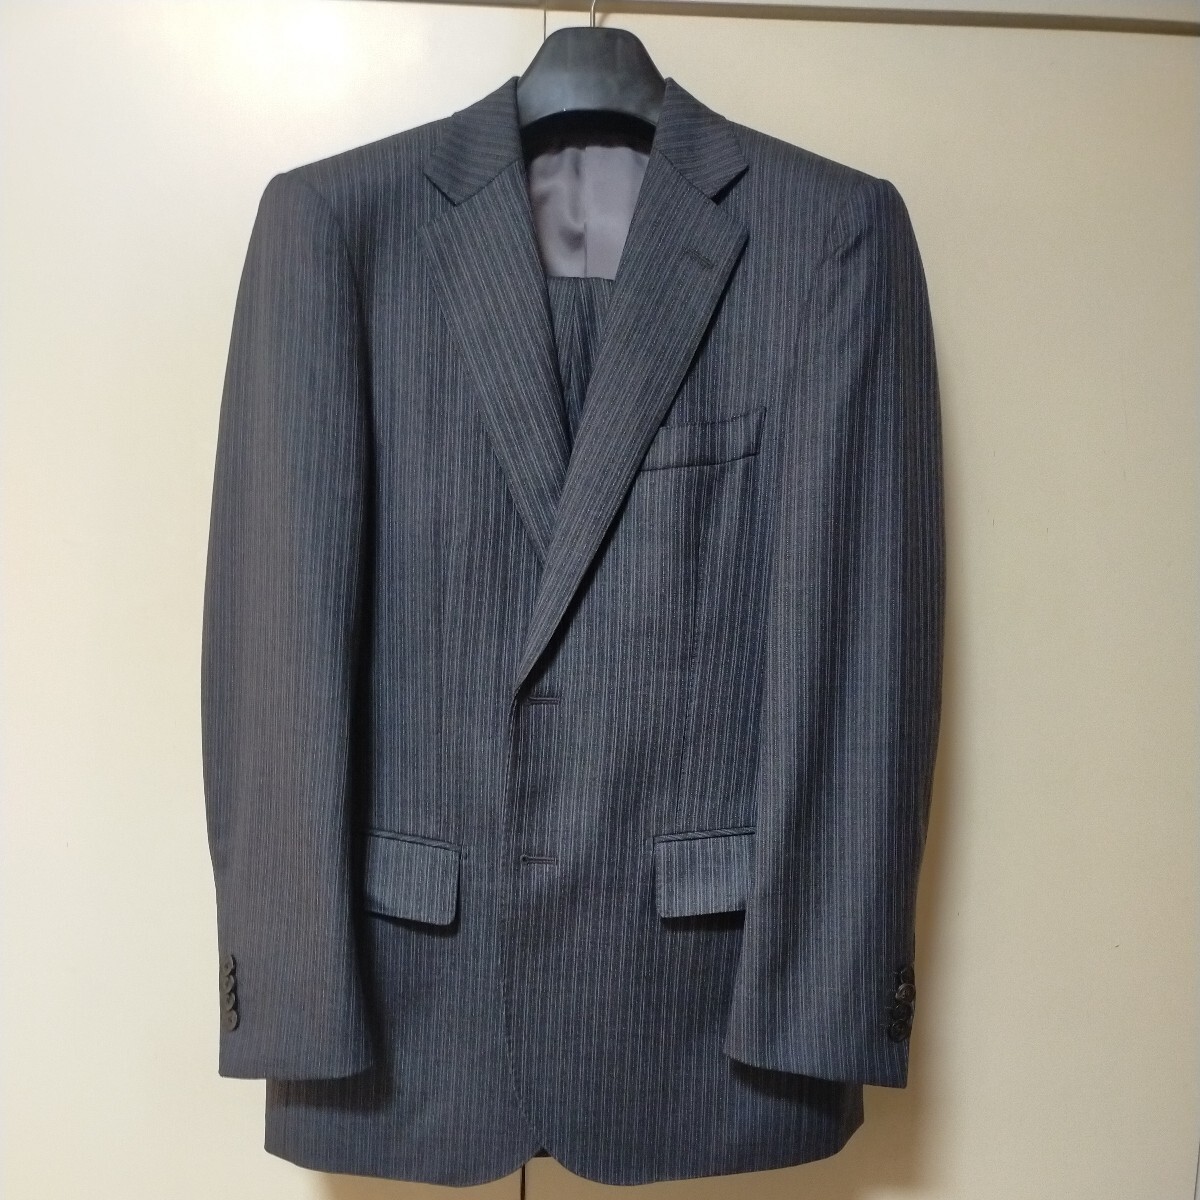  liquidation 1 jpy start gray stripe single suit wool 100% Super120 size A5 total reverse side side Benz 